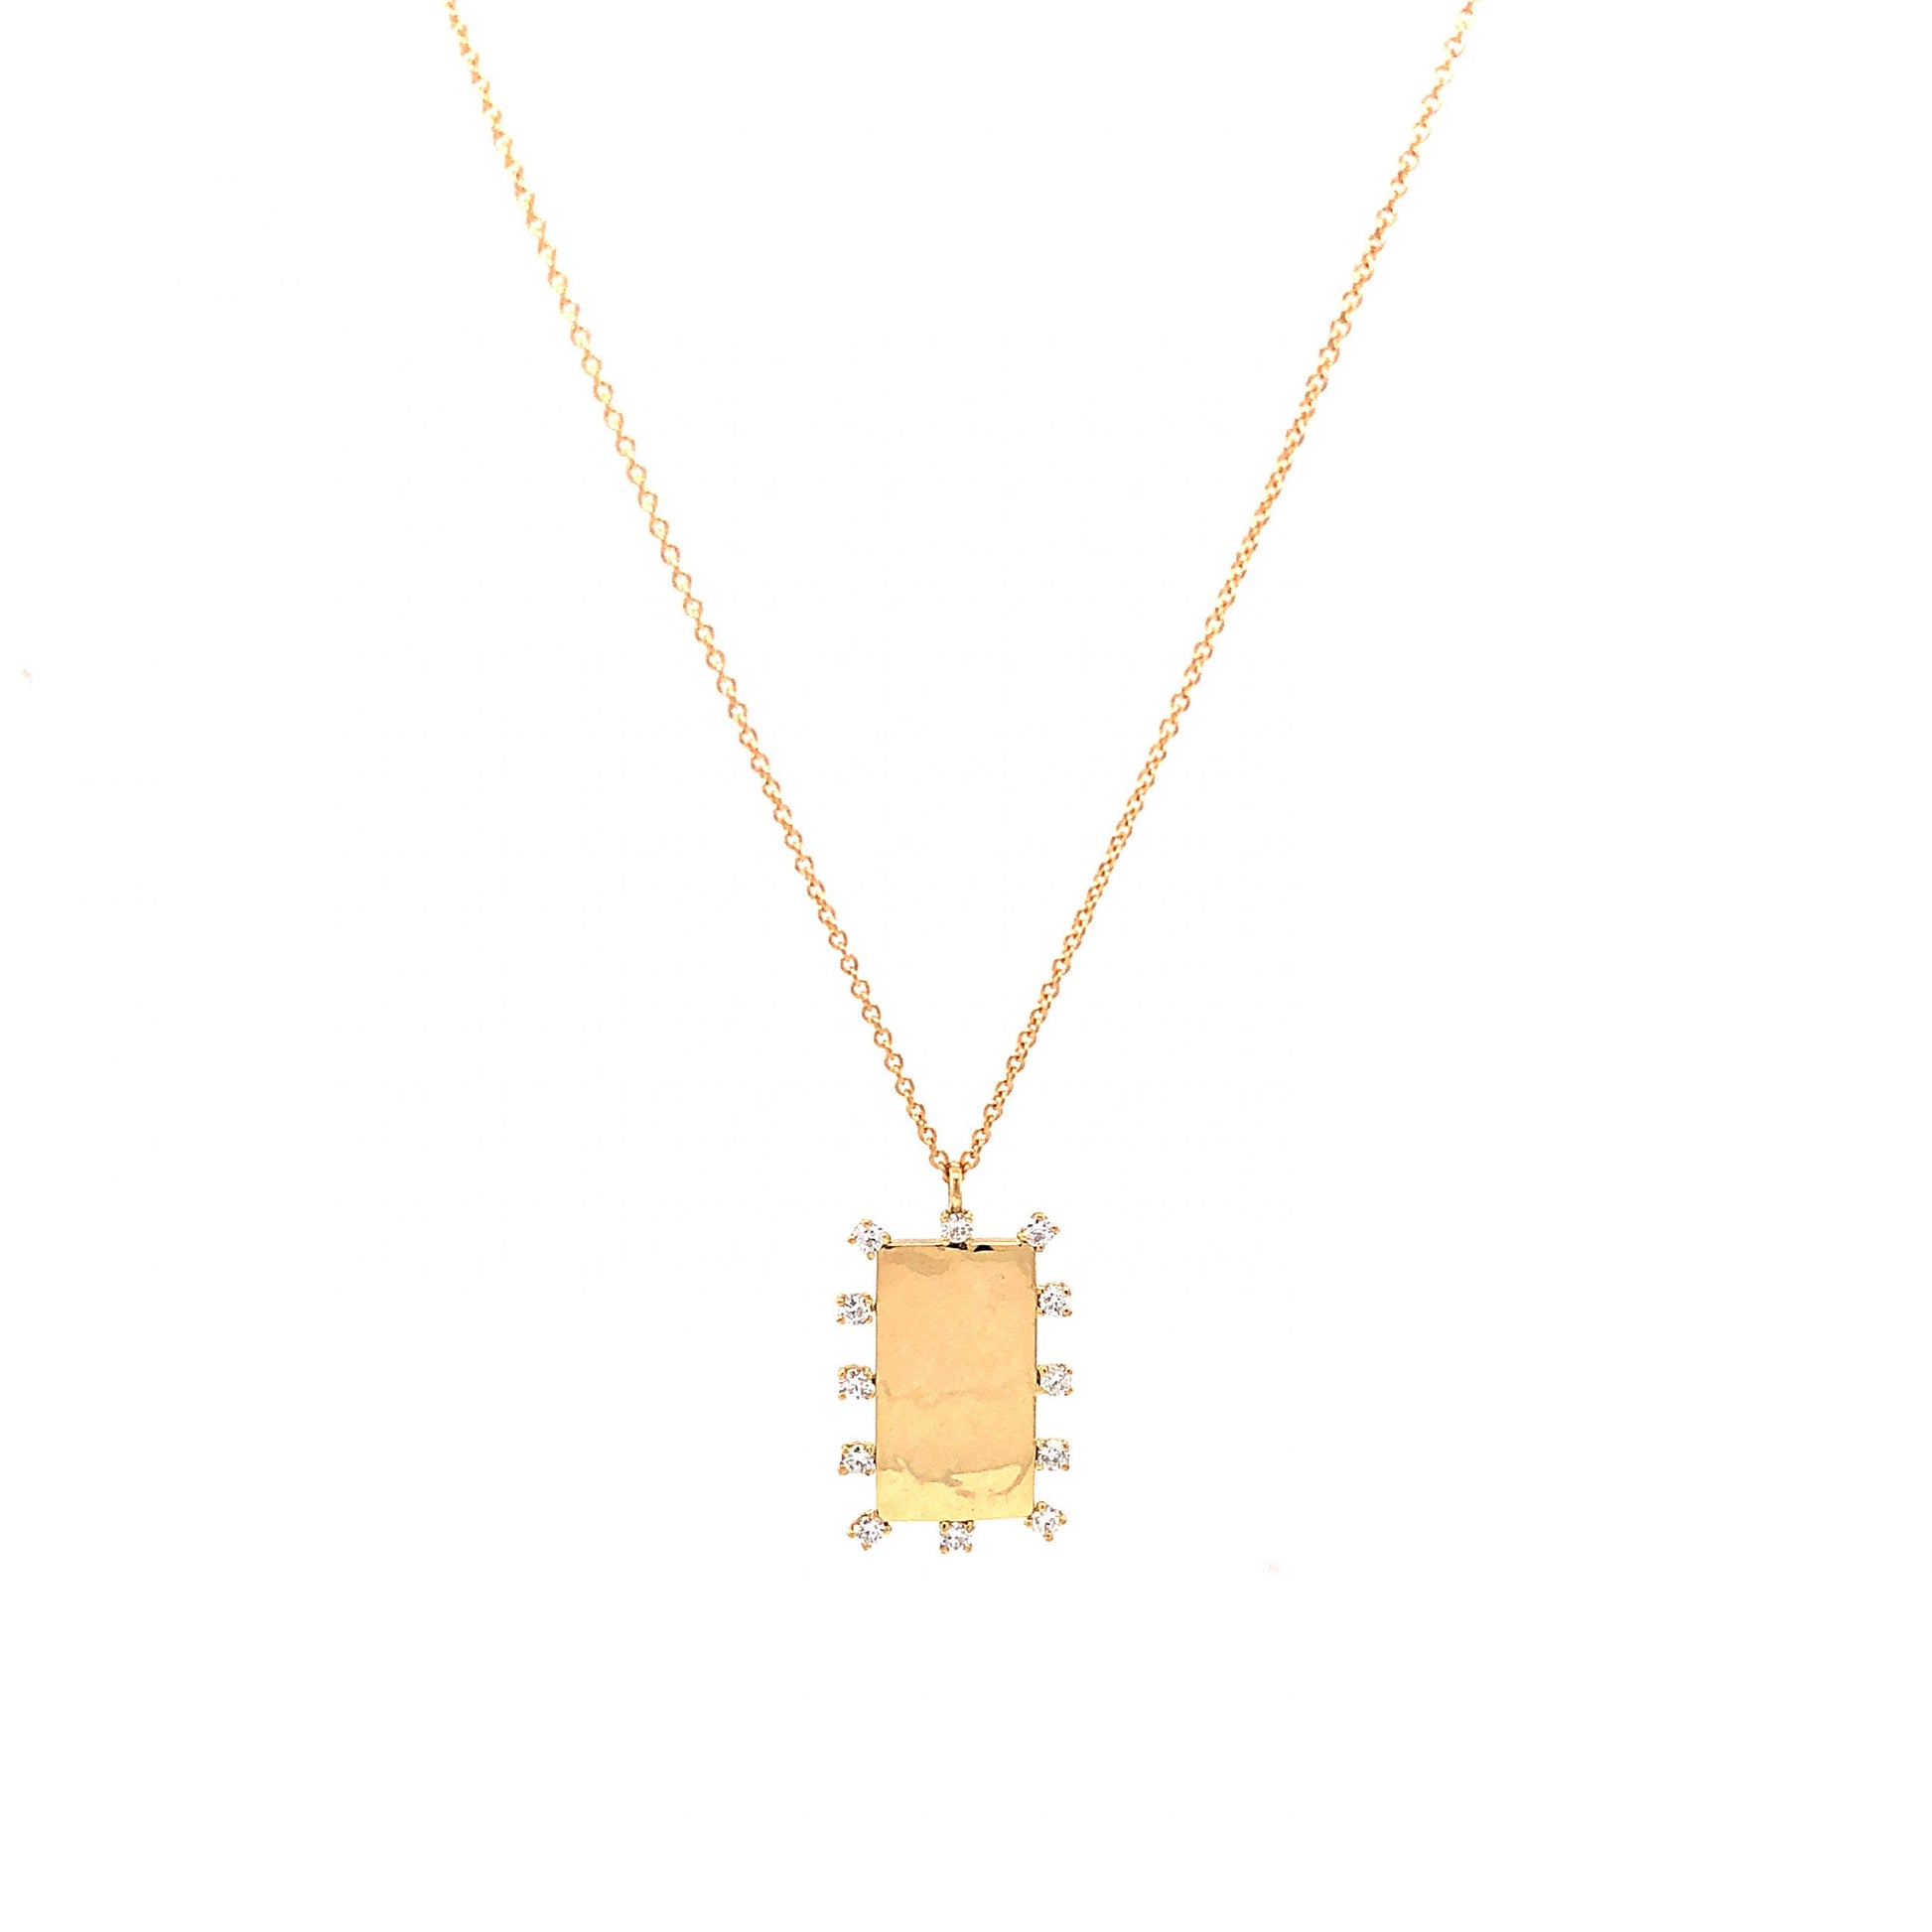 Rectangular Diamond Pendant Necklace in 18k Yellow GoldComposition: 18 Karat Yellow GoldTotal Diamond Weight: .18 ctTotal Gram Weight: 3.0 gInscription: 18k 